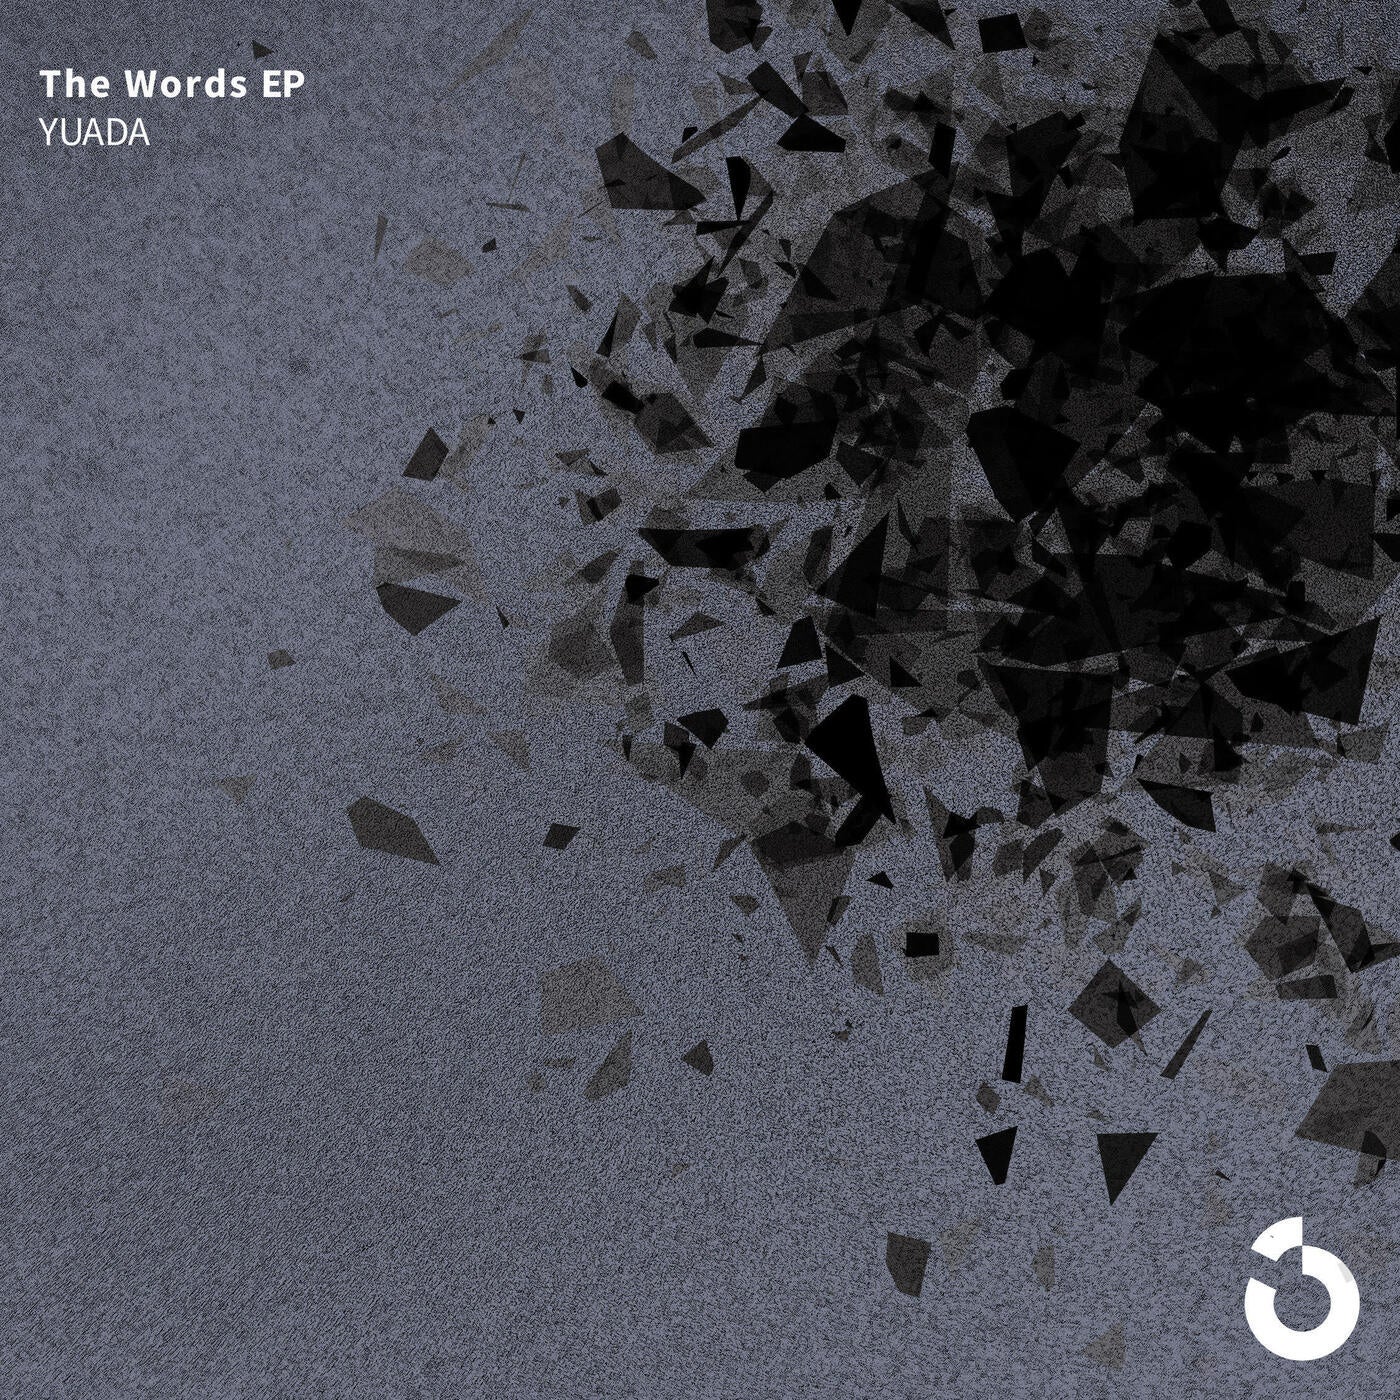 The Words EP - Original Mix